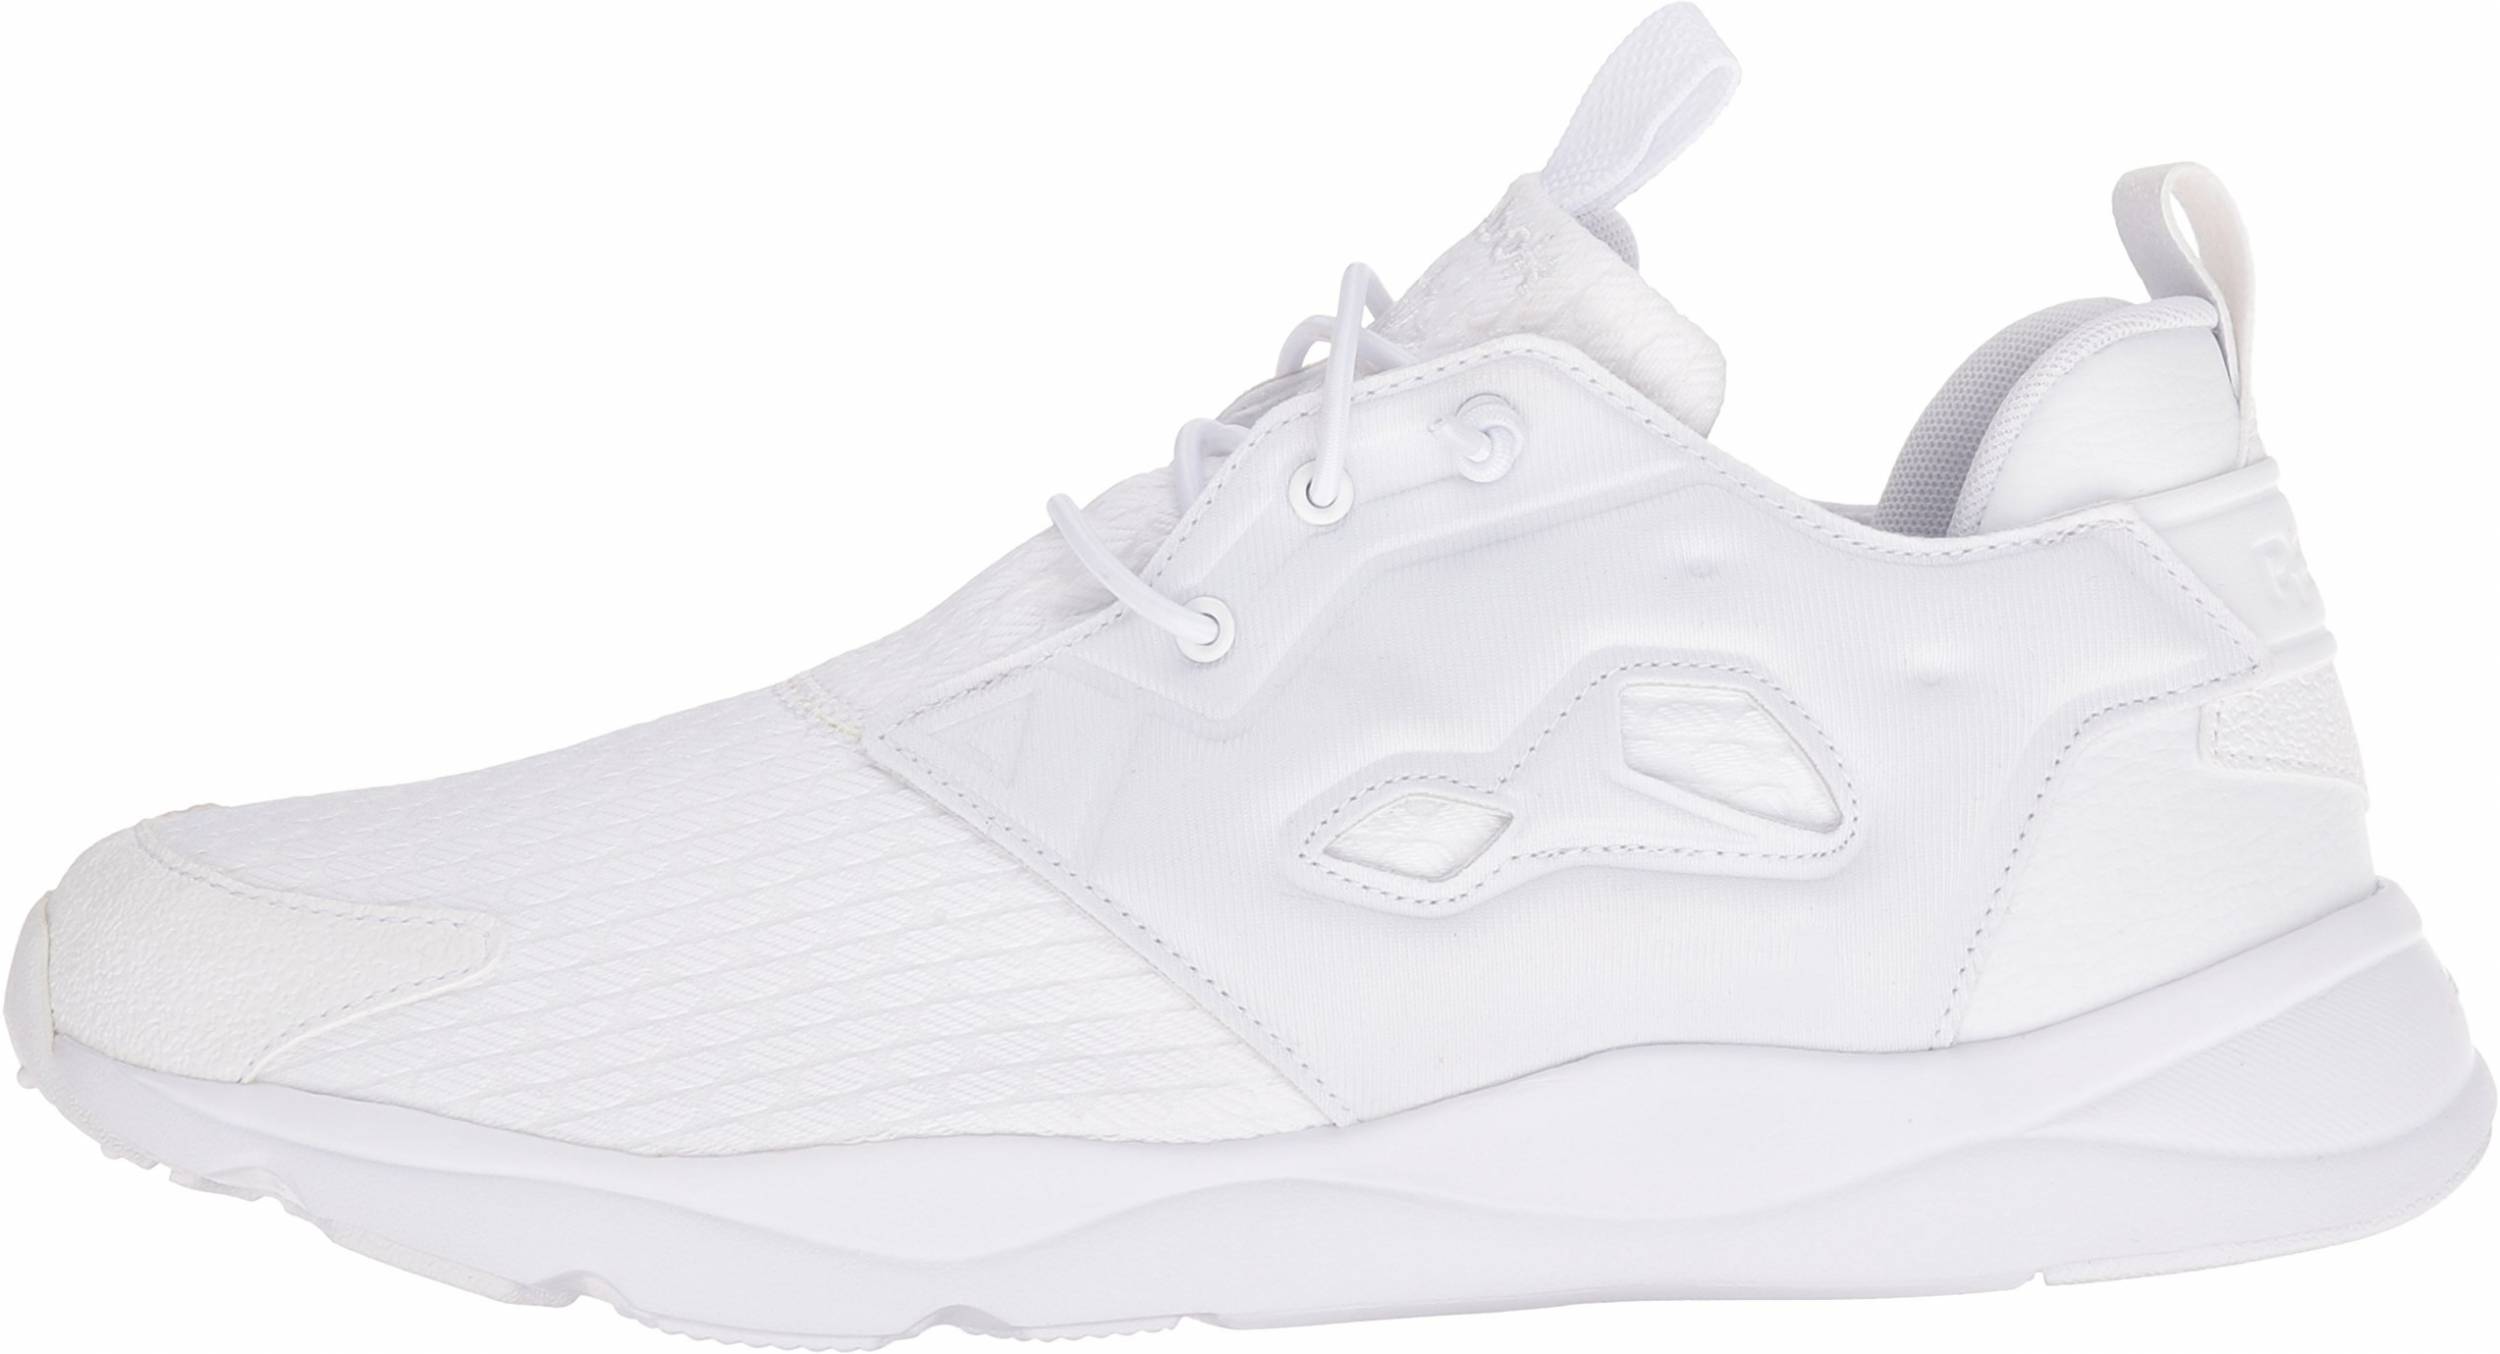 Details about   Reebok Classic FuryLite Triple White Men Sneaker Sport Shoes Trainers V67158 WOW 